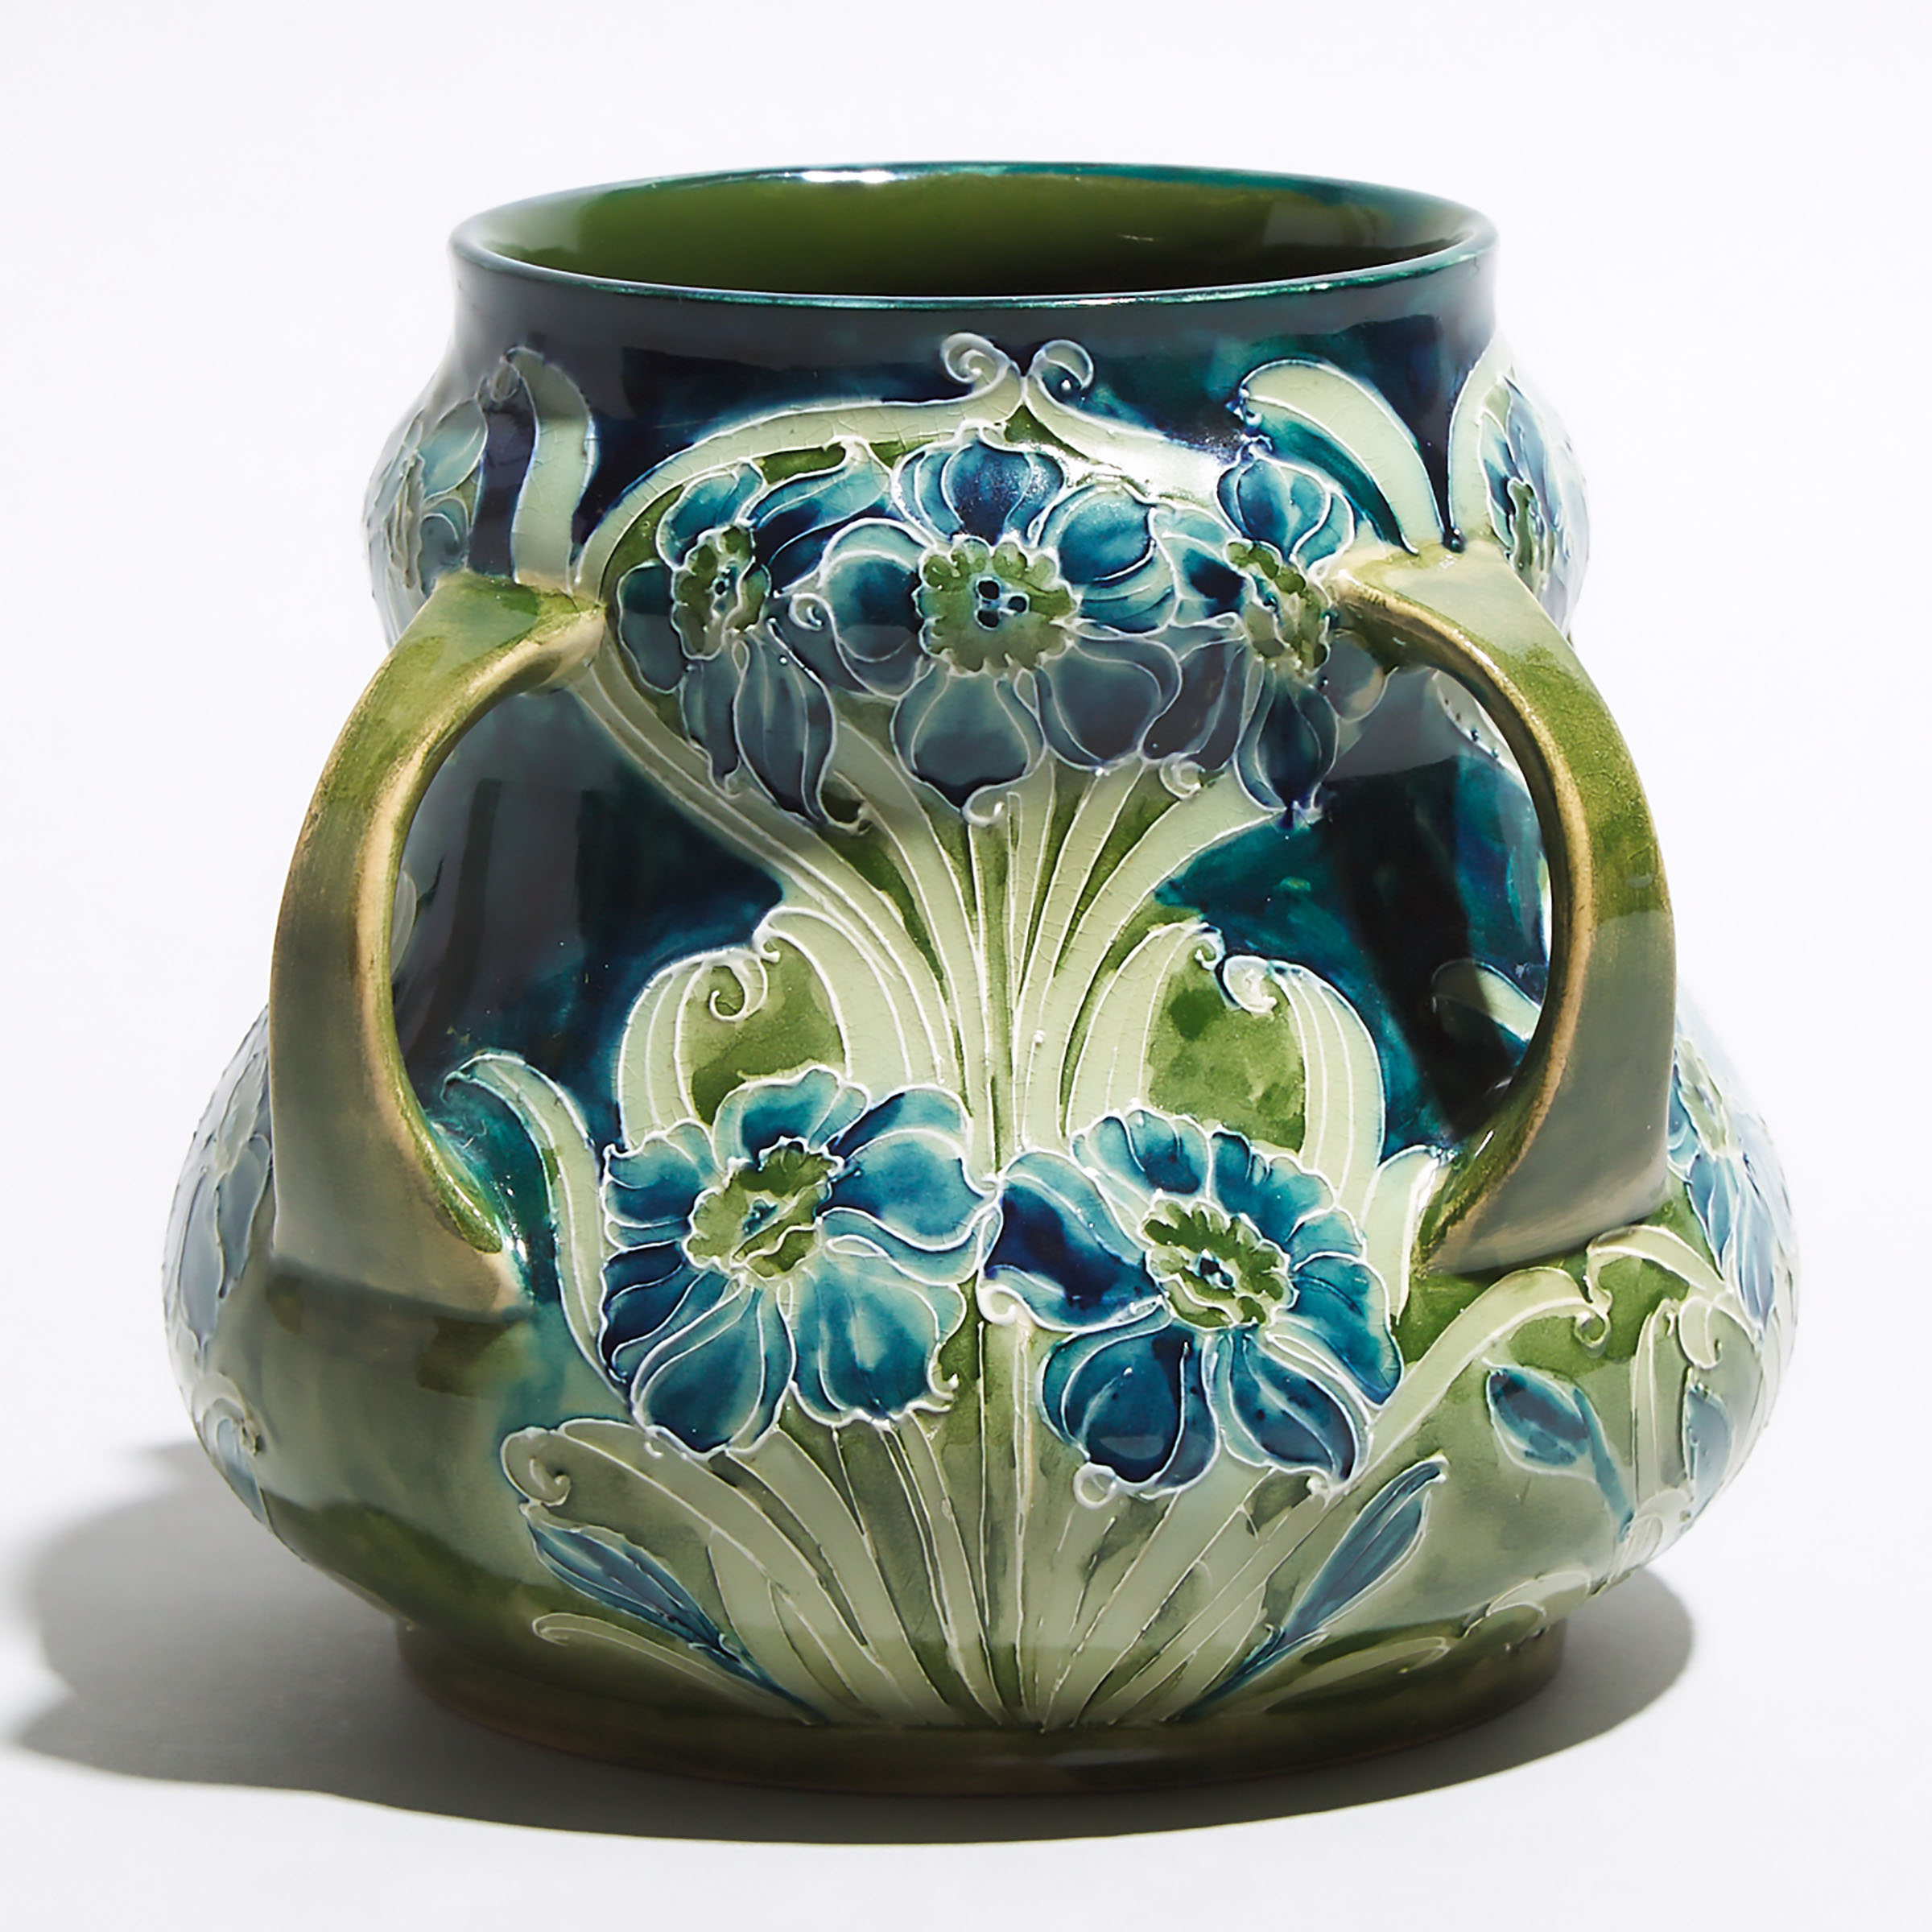 Macintyre Moorcroft Florian Four-Handled Vase, c.1900